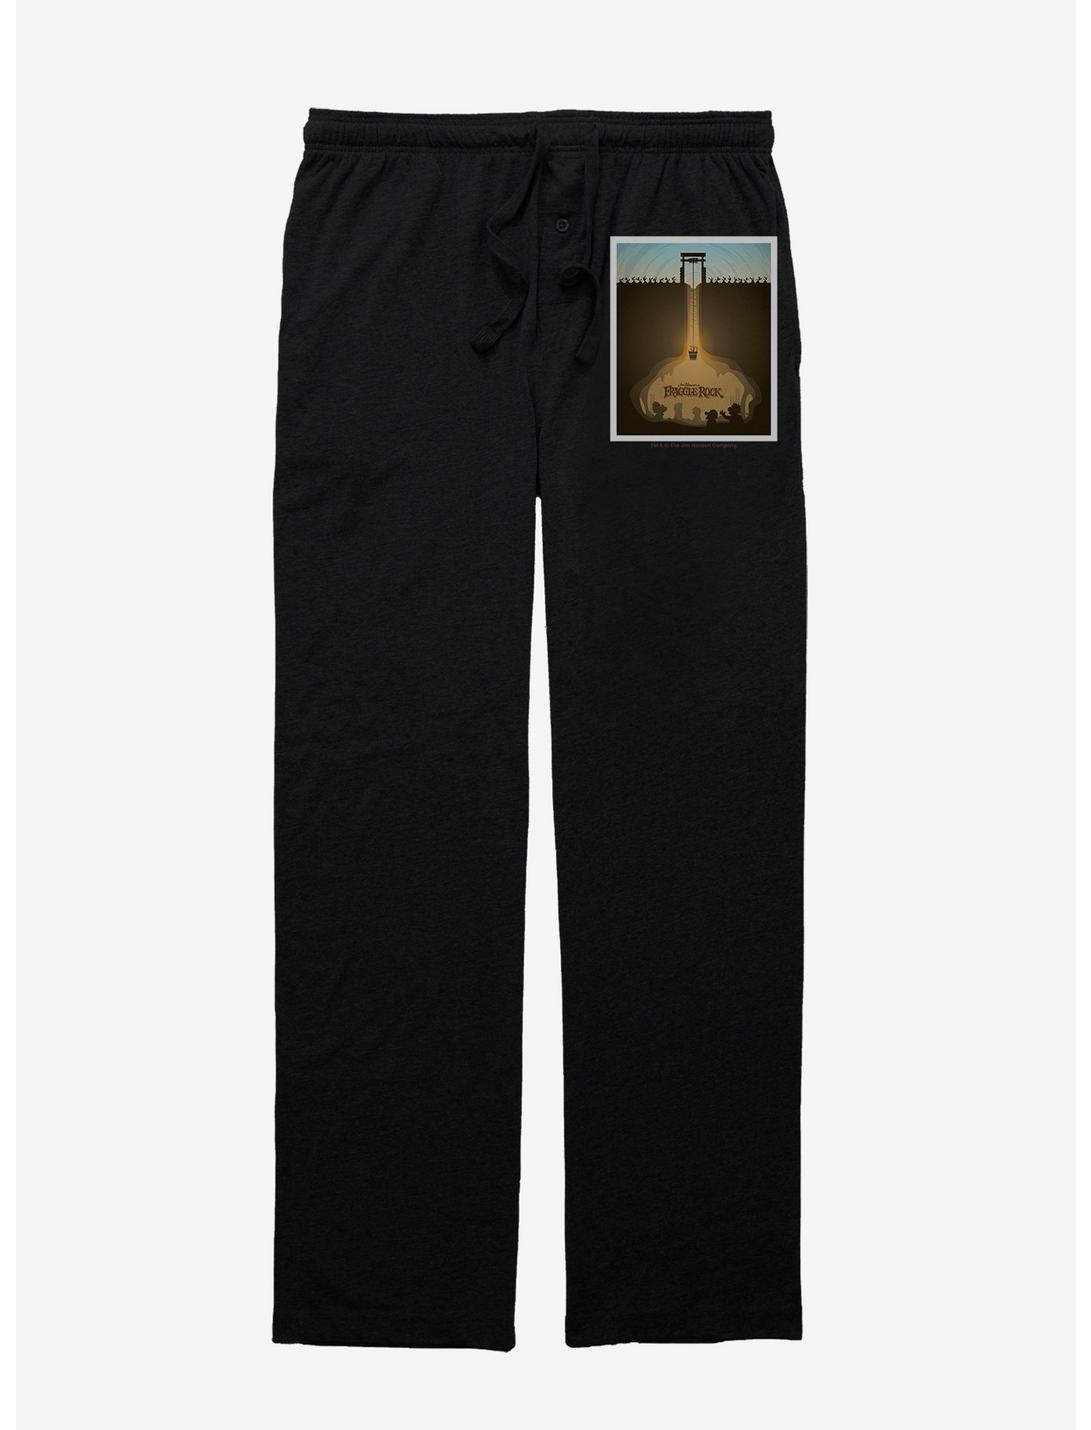 Jim Henson's Fraggle Rock Underground Pajama Pants, BLACK, hi-res